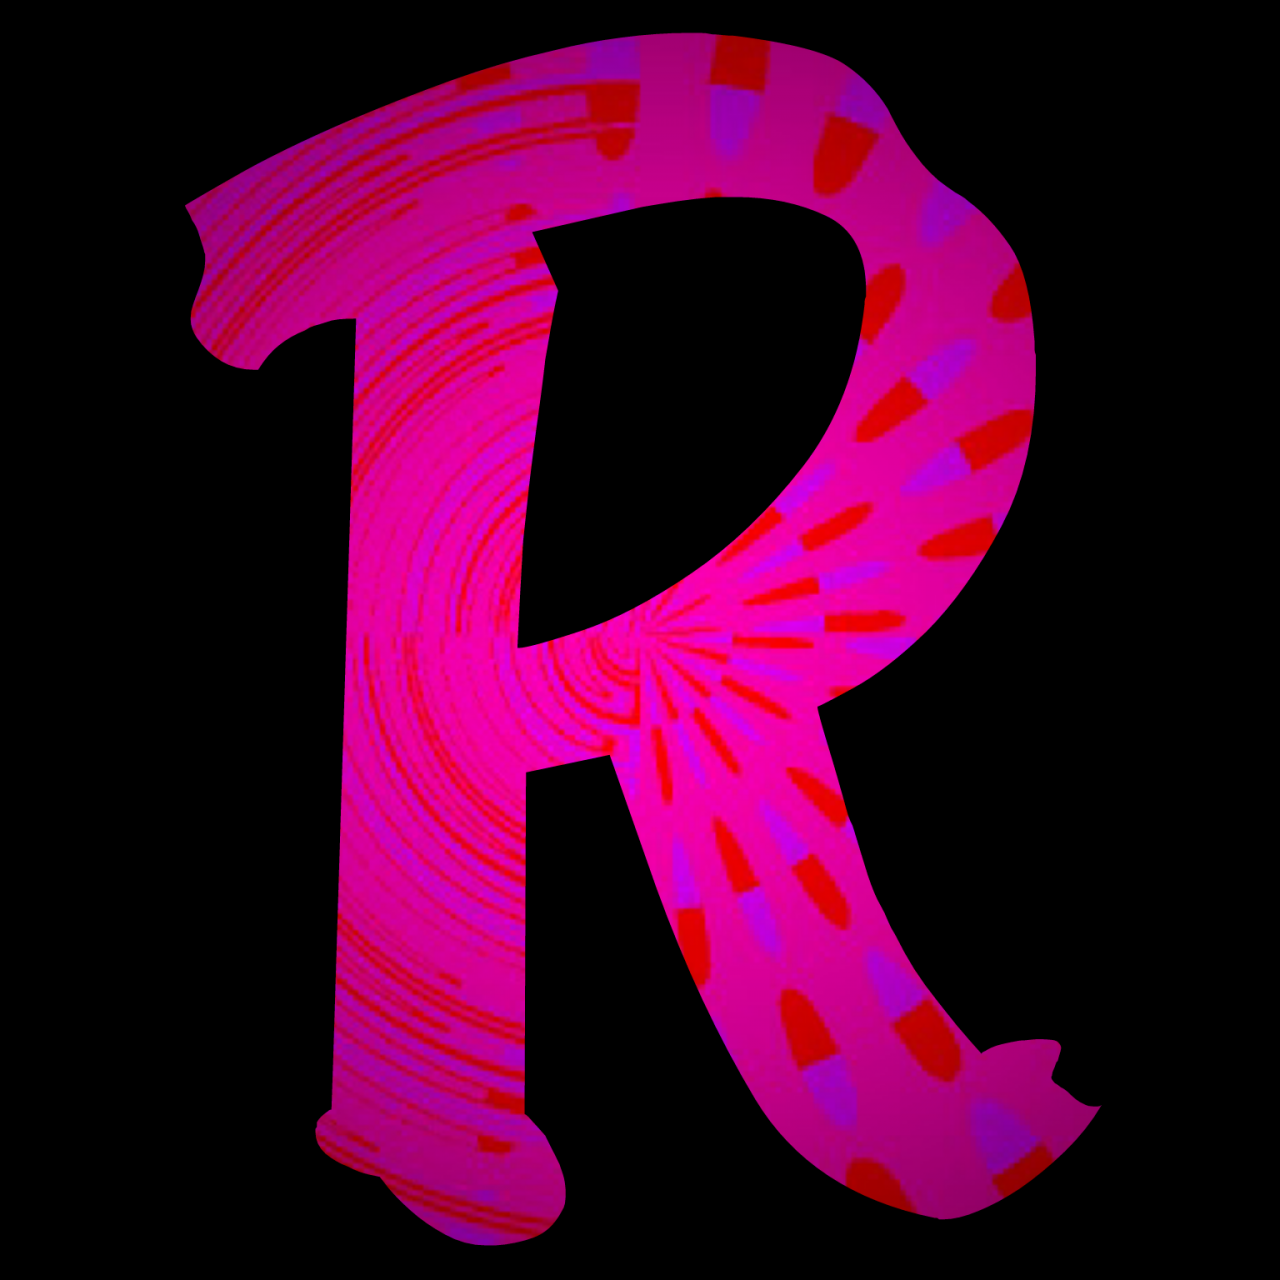 صور حرف ال r , رمزيات مزخرف بحرف r شوق وغزل